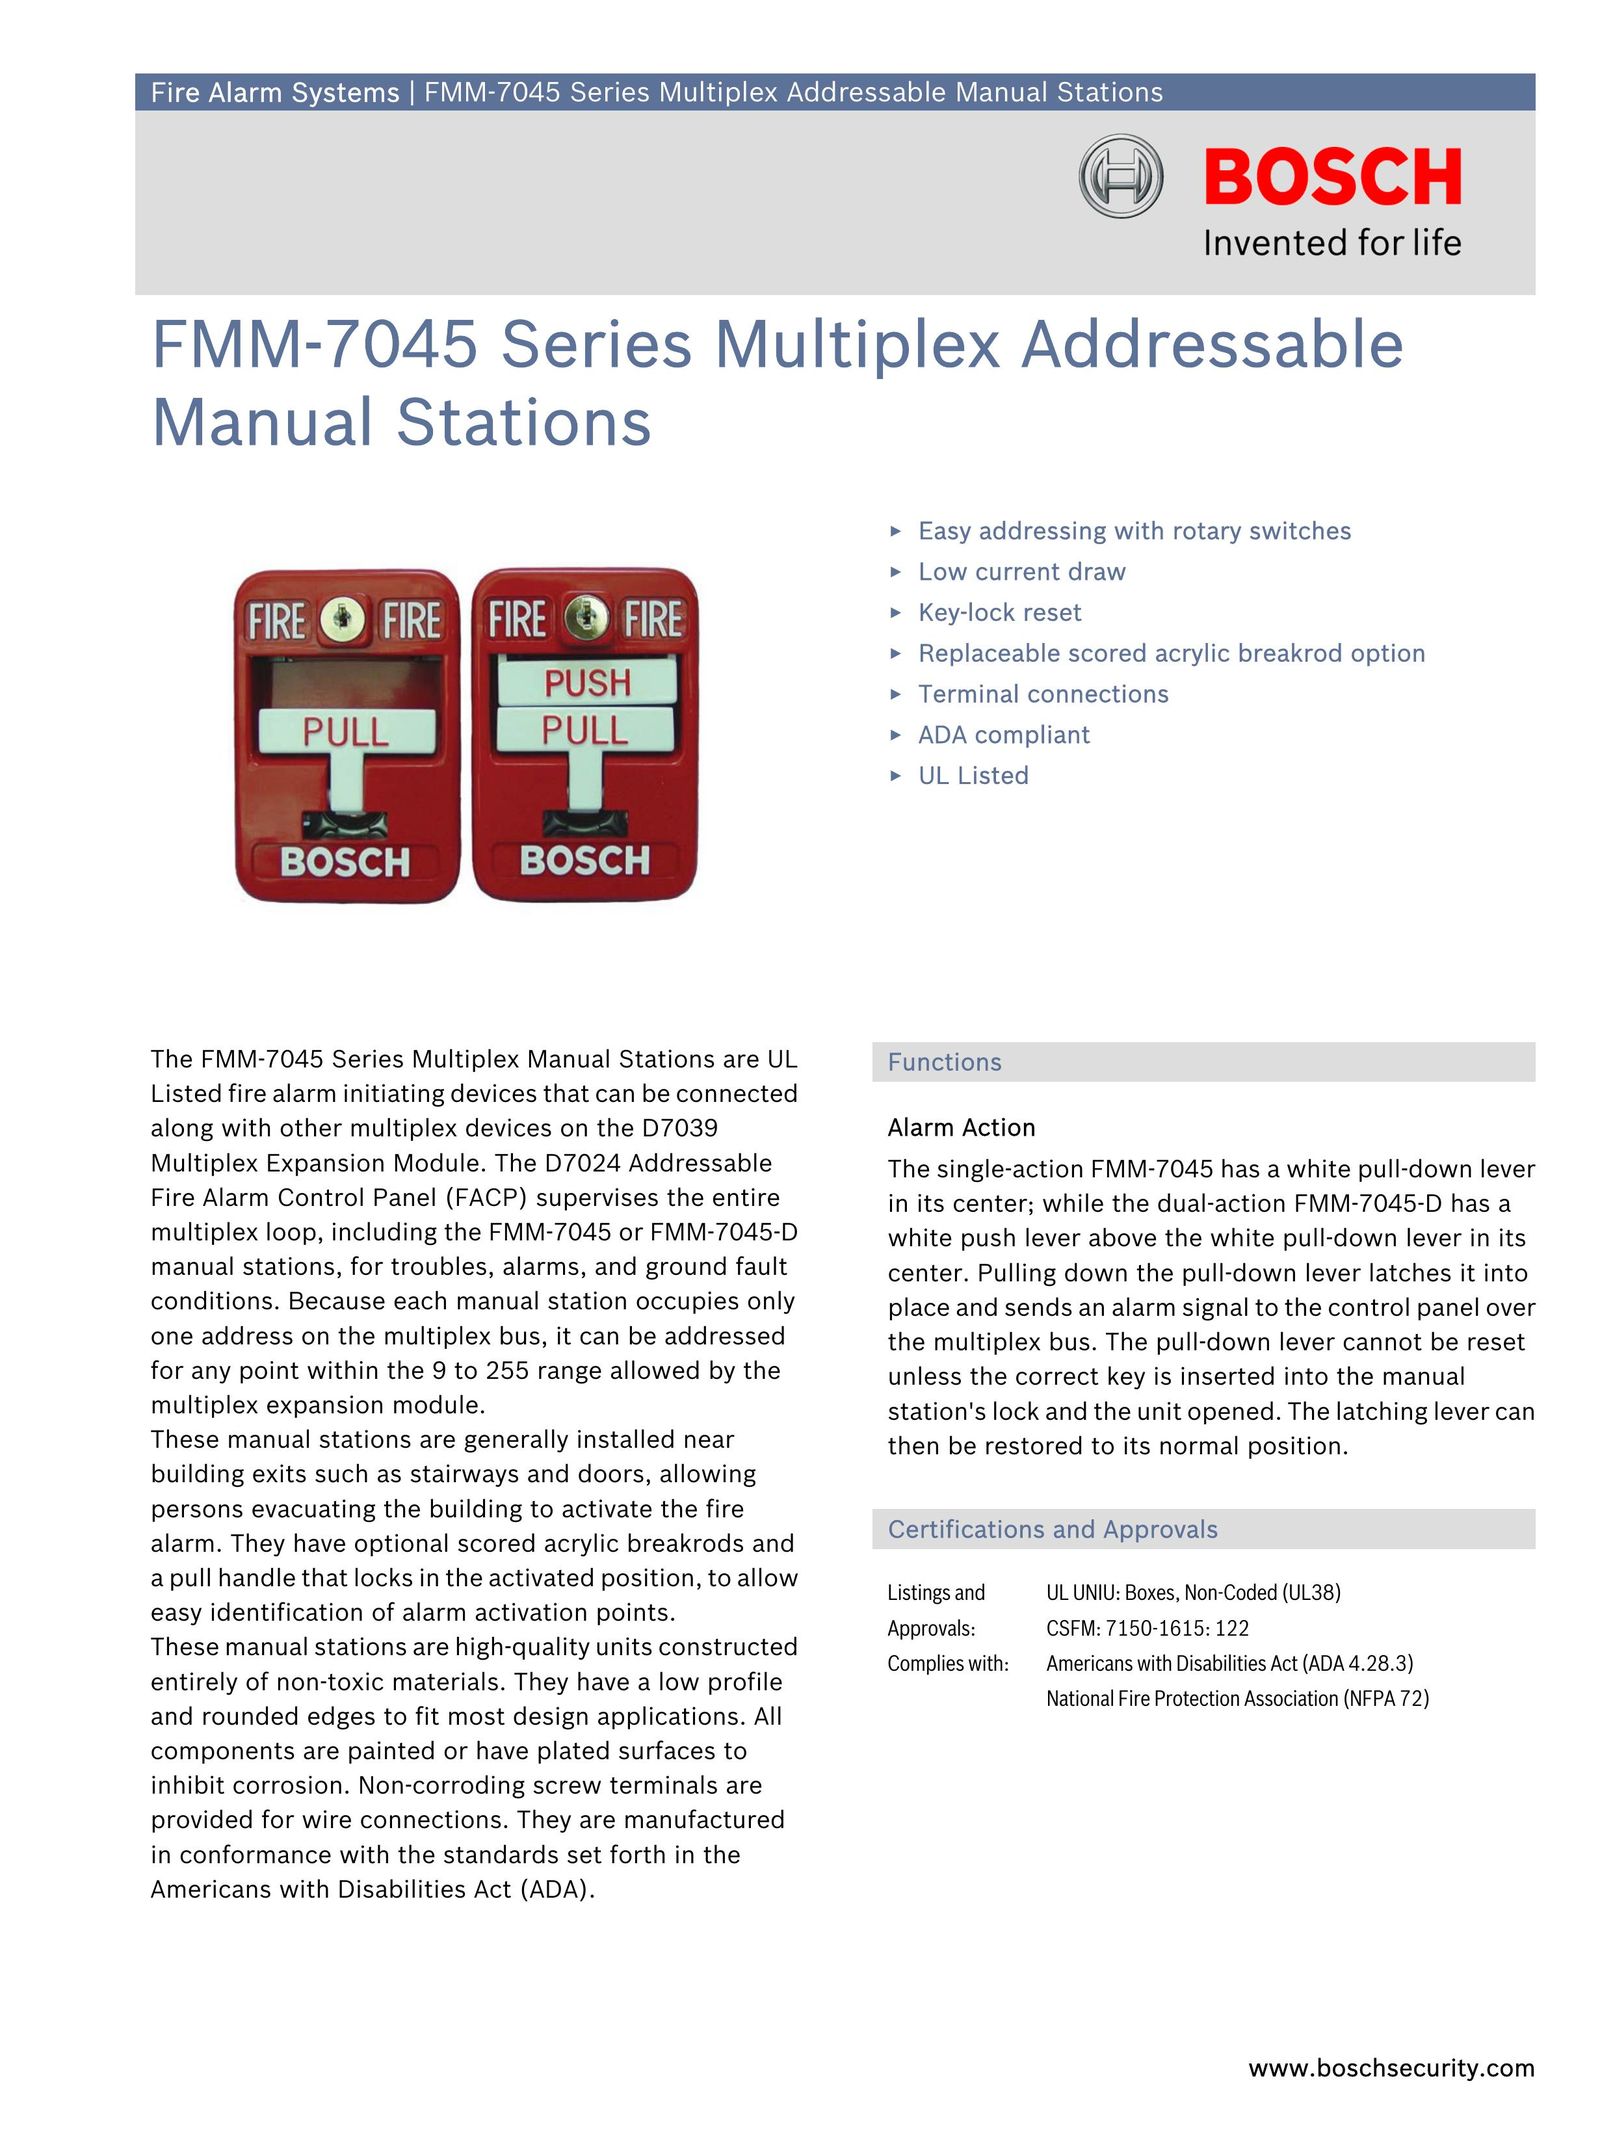 Bosch Appliances FMM-7045 Series Smoke Alarm User Manual